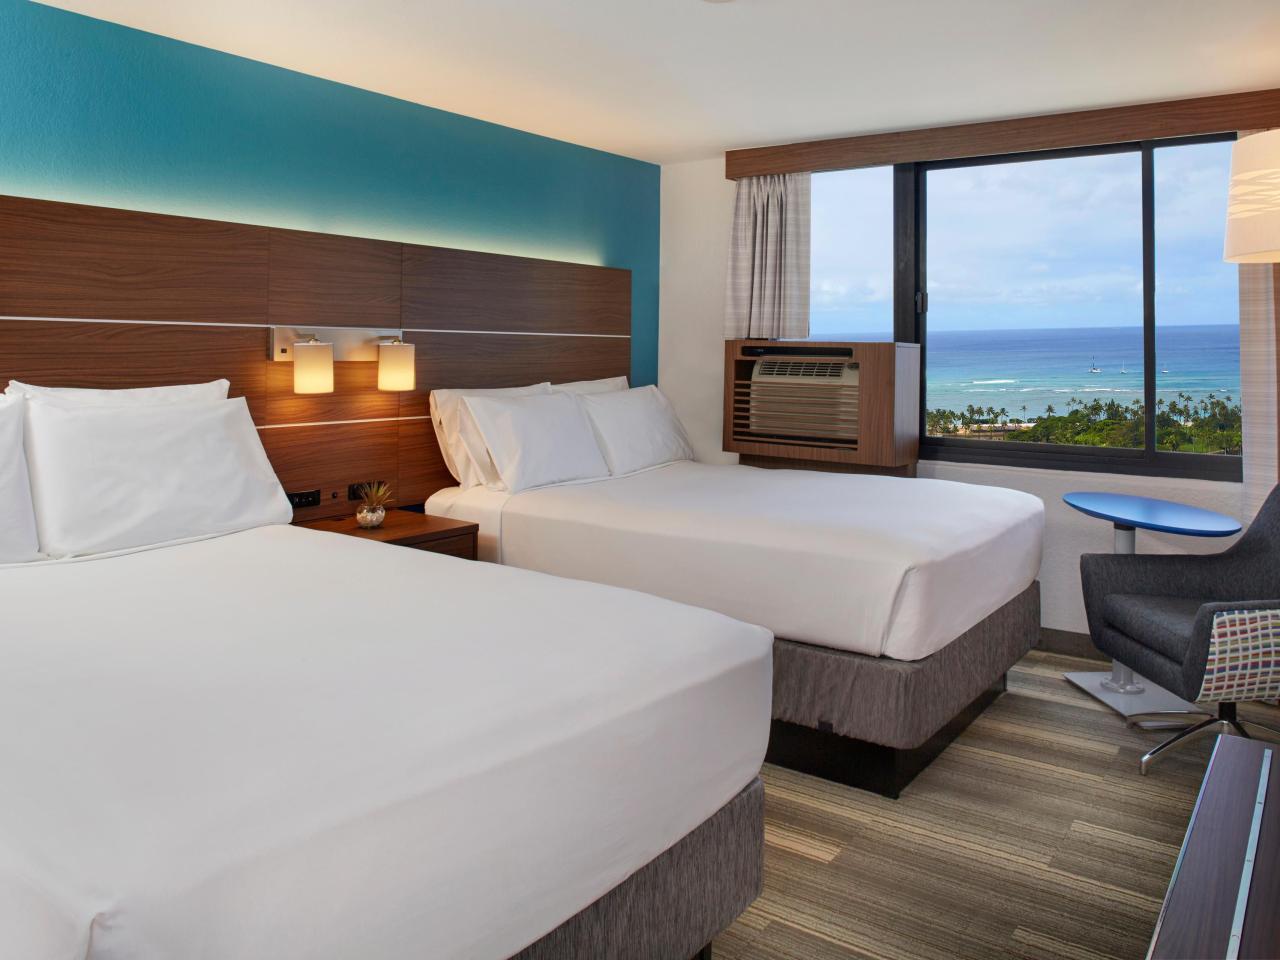 Holiday Inn Express Waikiki - Honolulu, United States